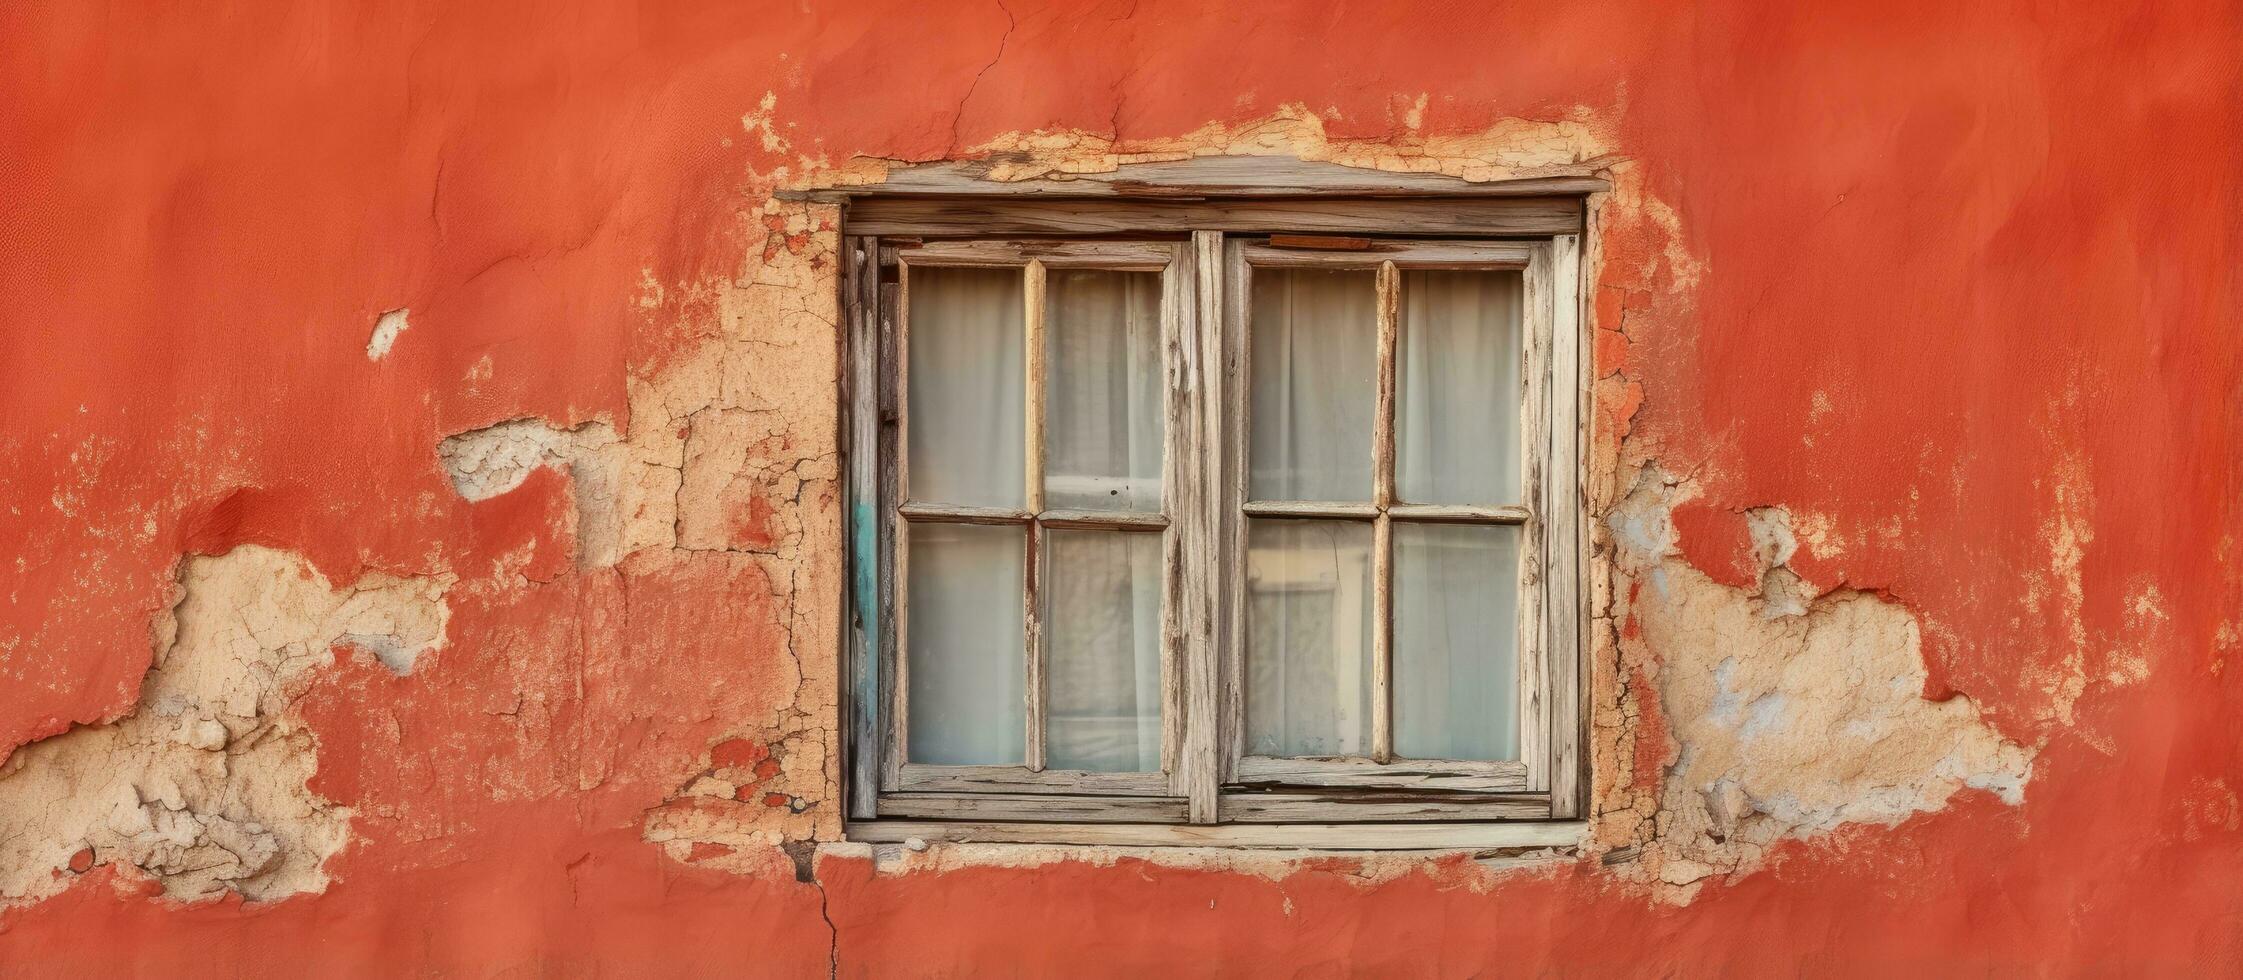 peeling paint on an aged window frame photo